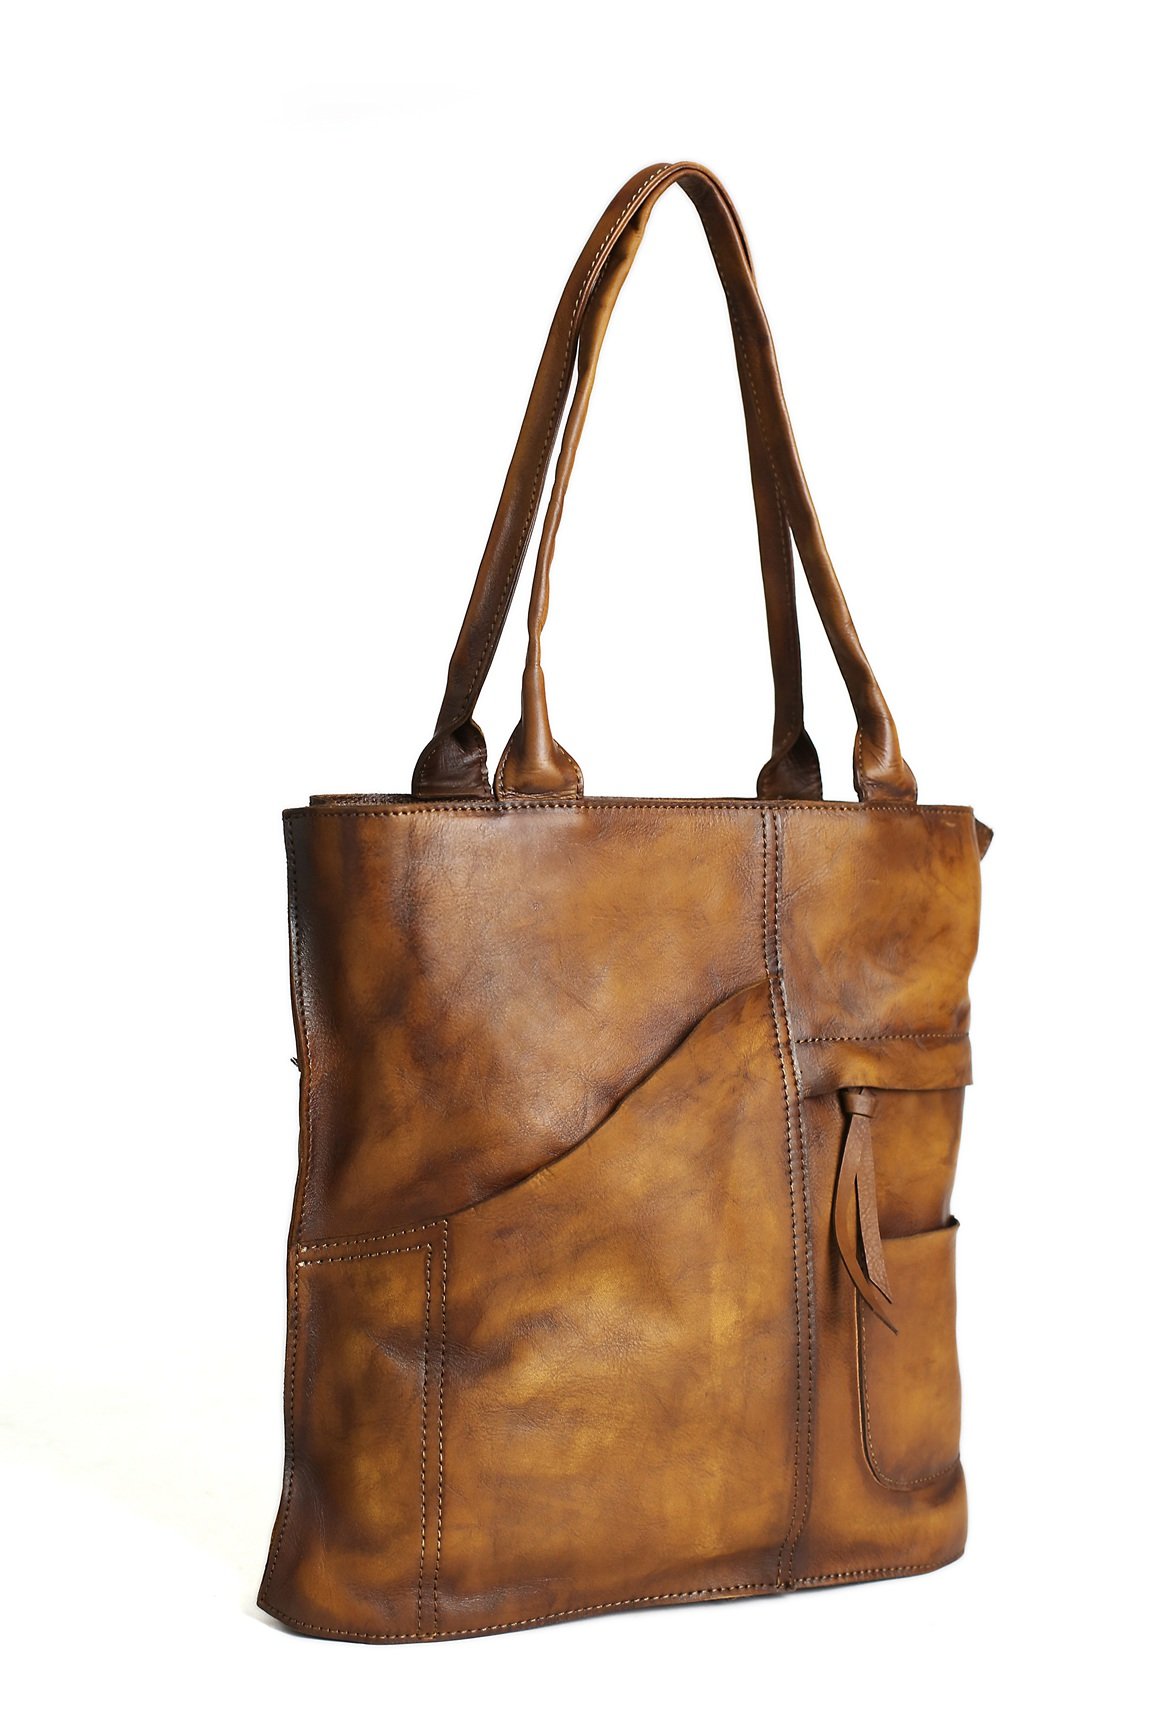 MoshiLeatherBag - Handmade Leather Bag Manufacturer — Vintage Brown Leather Tote Bag, Women&#39;s ...